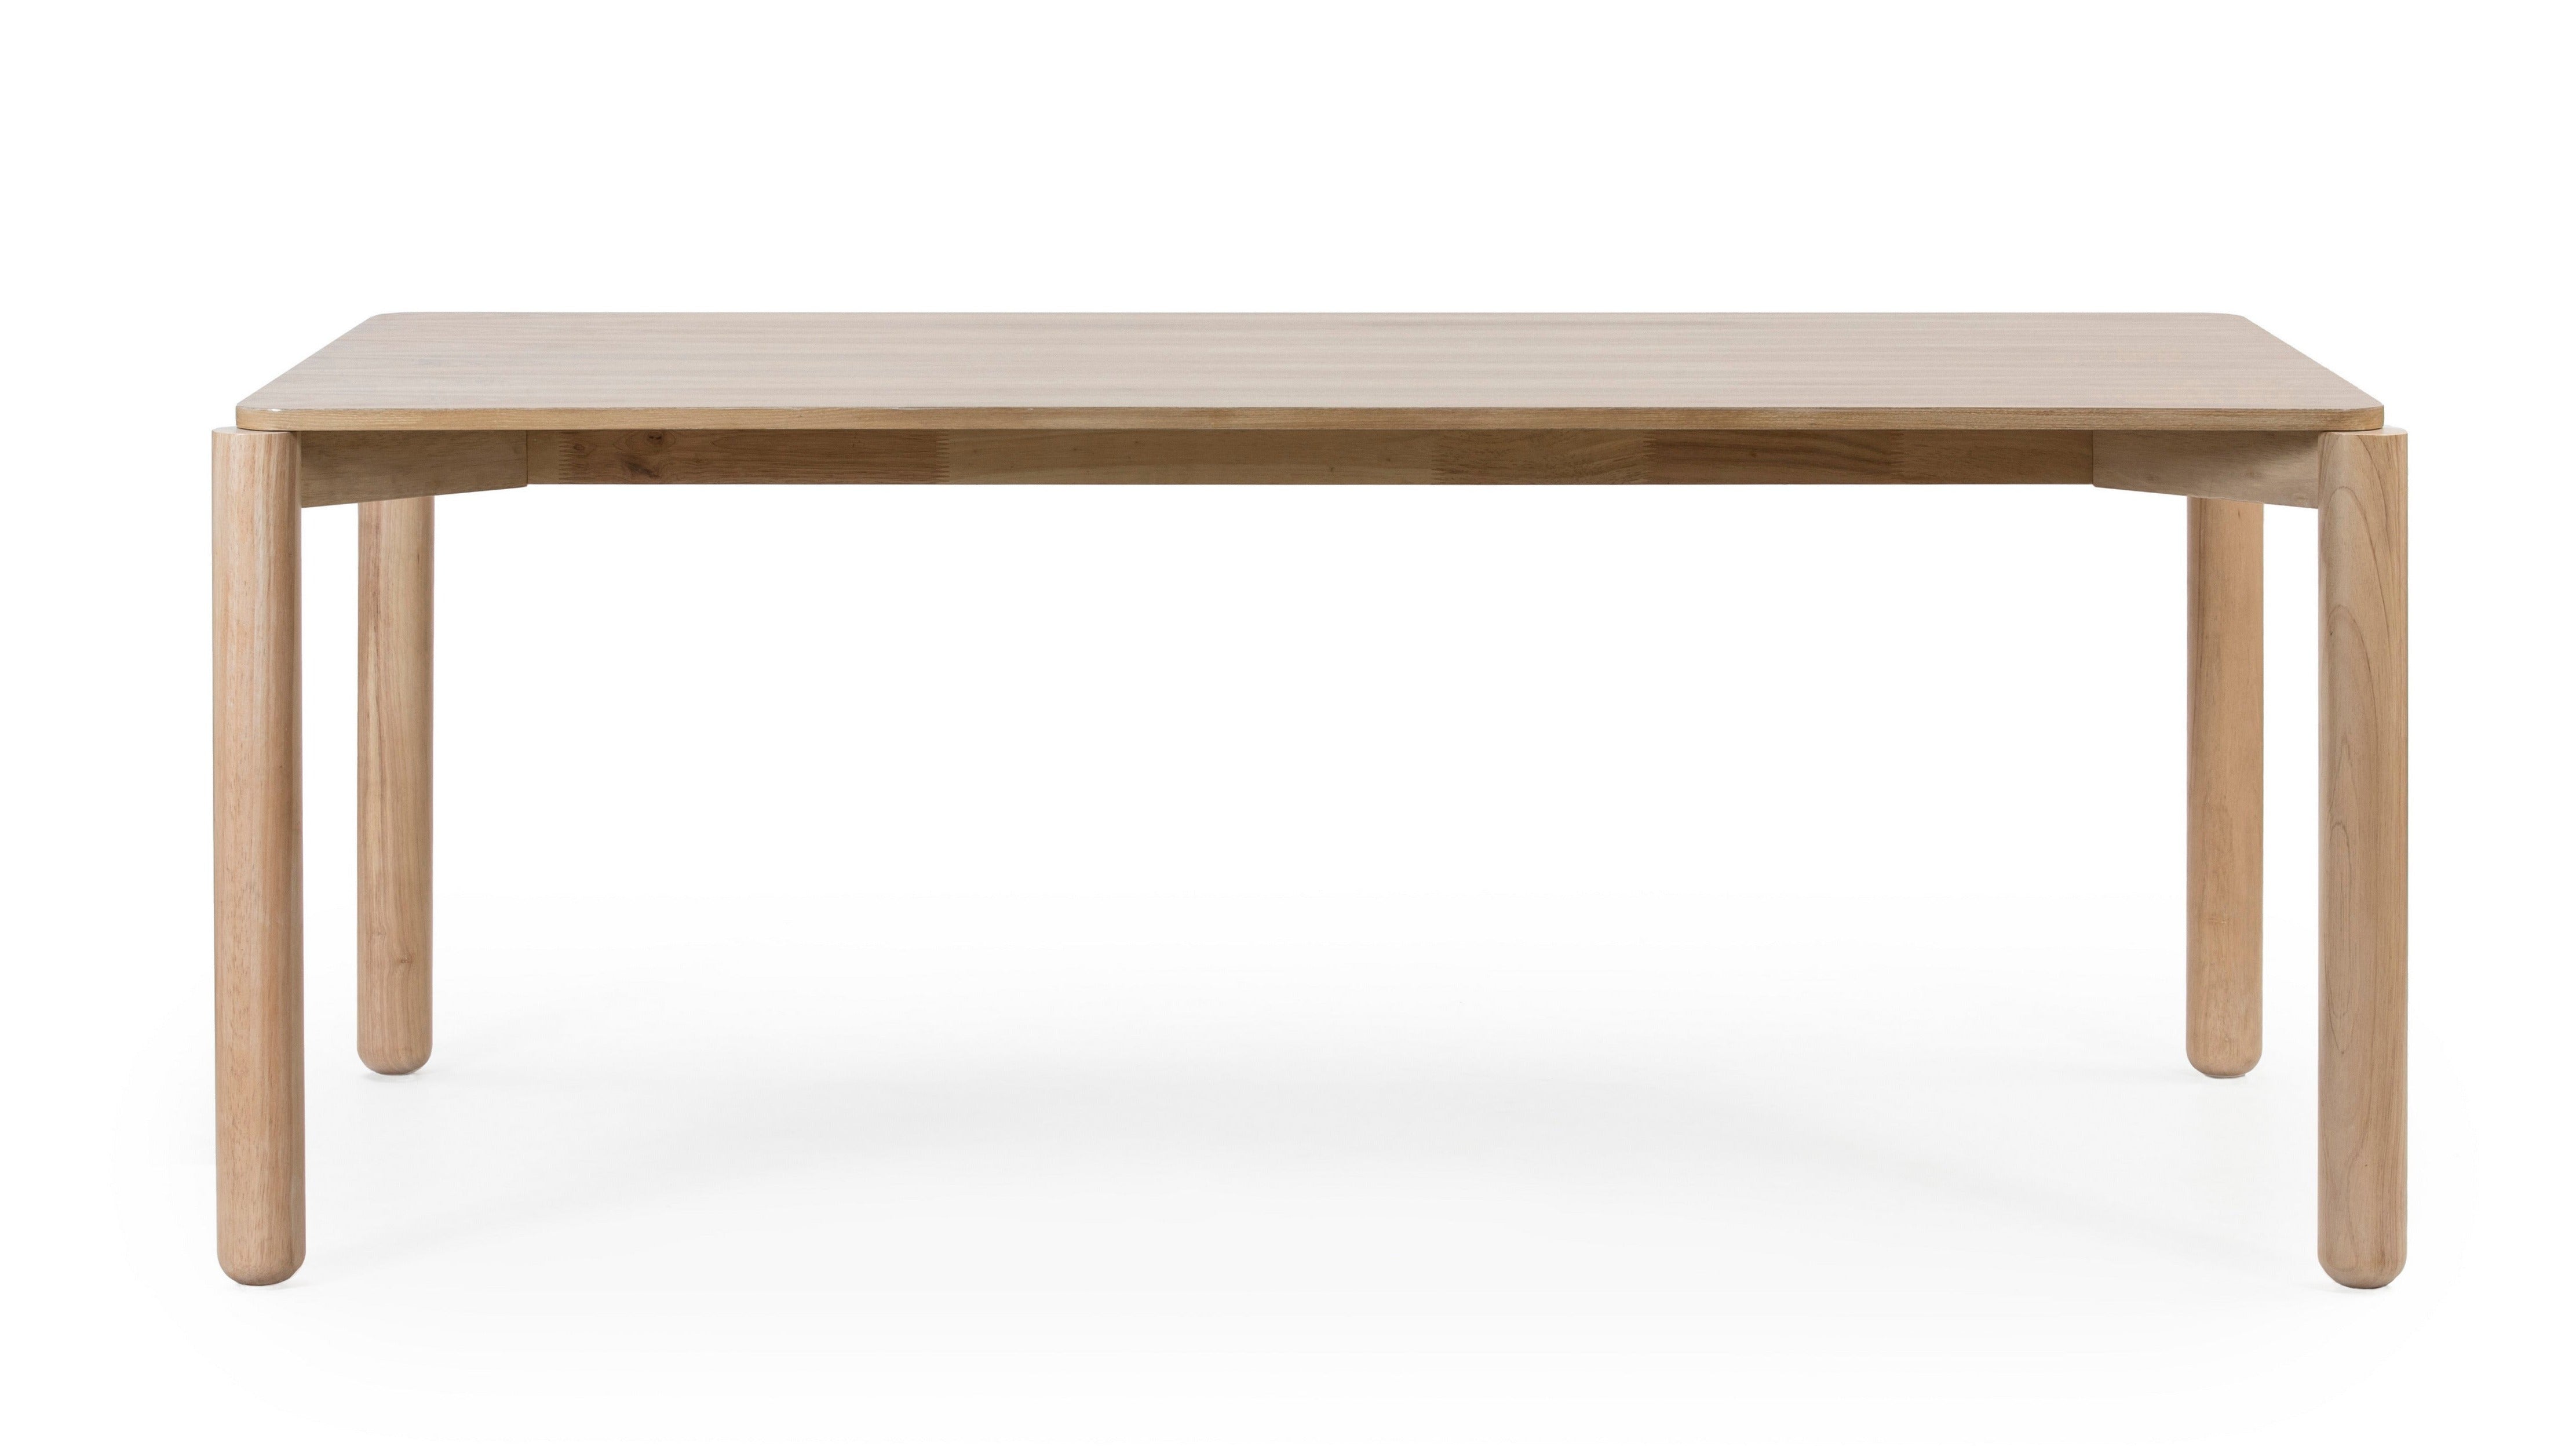 ATLAS wooden dining table